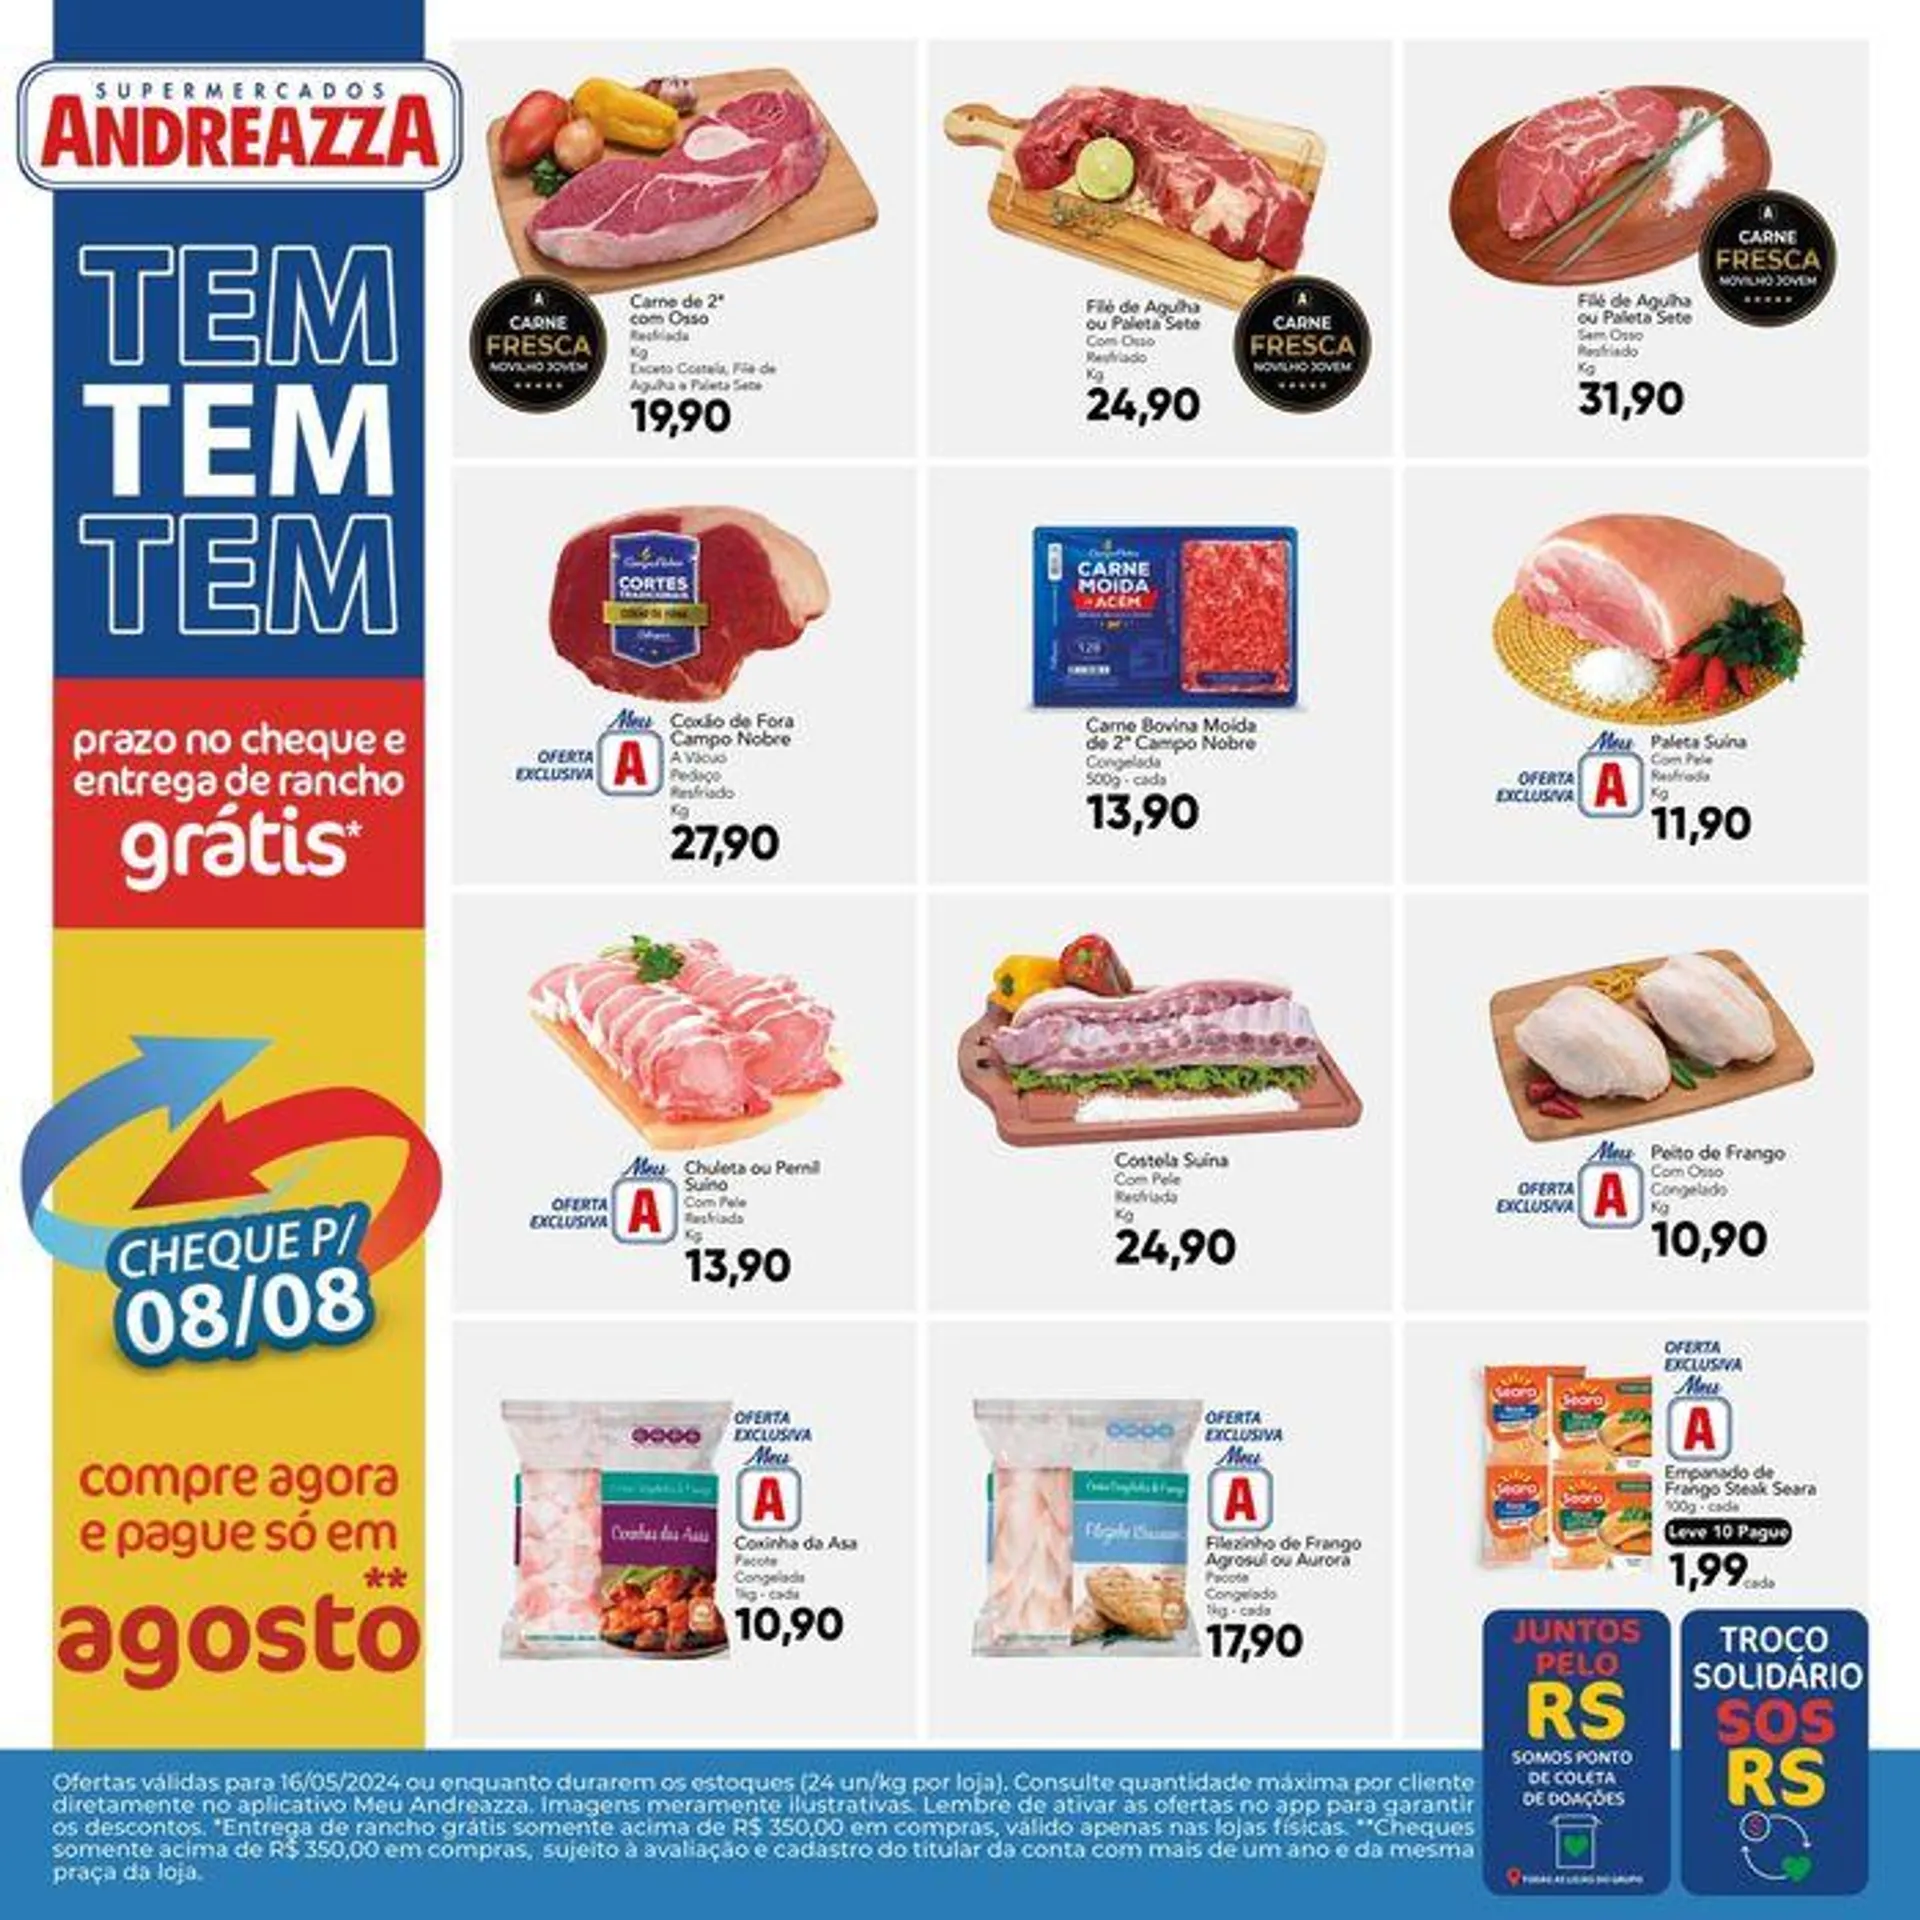 Oferta Supermercados Andreazza - 1